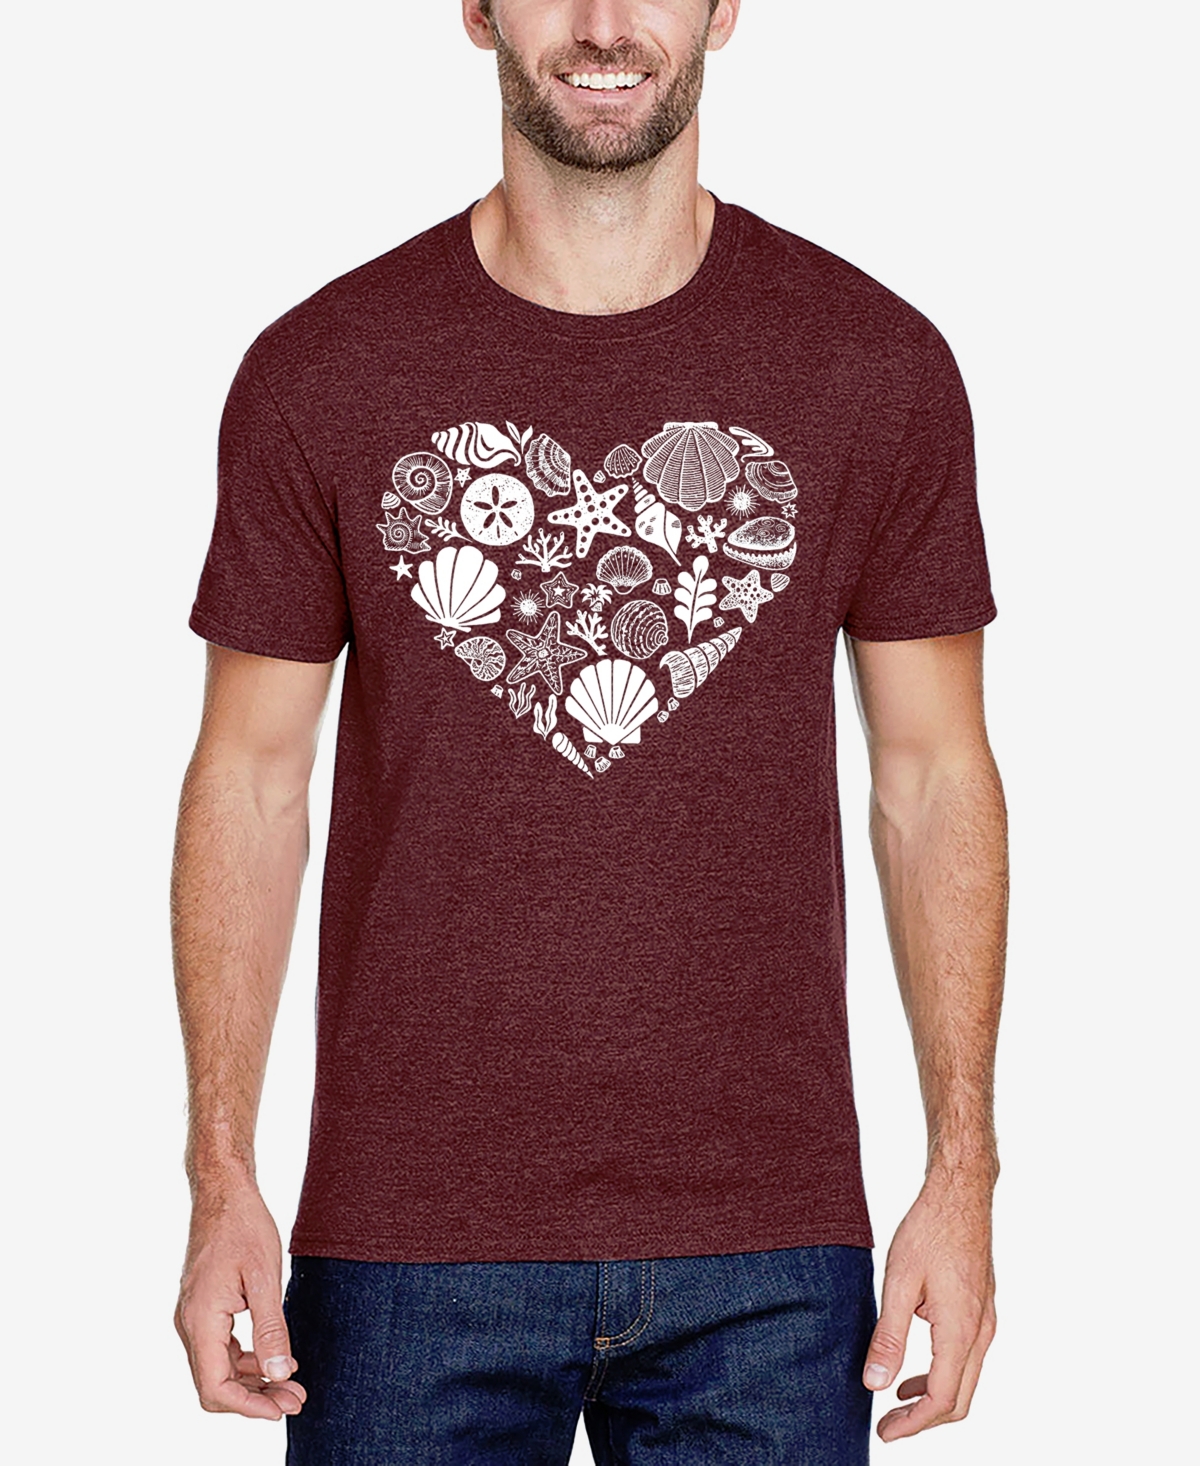 Sea Shells - Men's Premium Blend Word Art T-Shirt - Burgundy